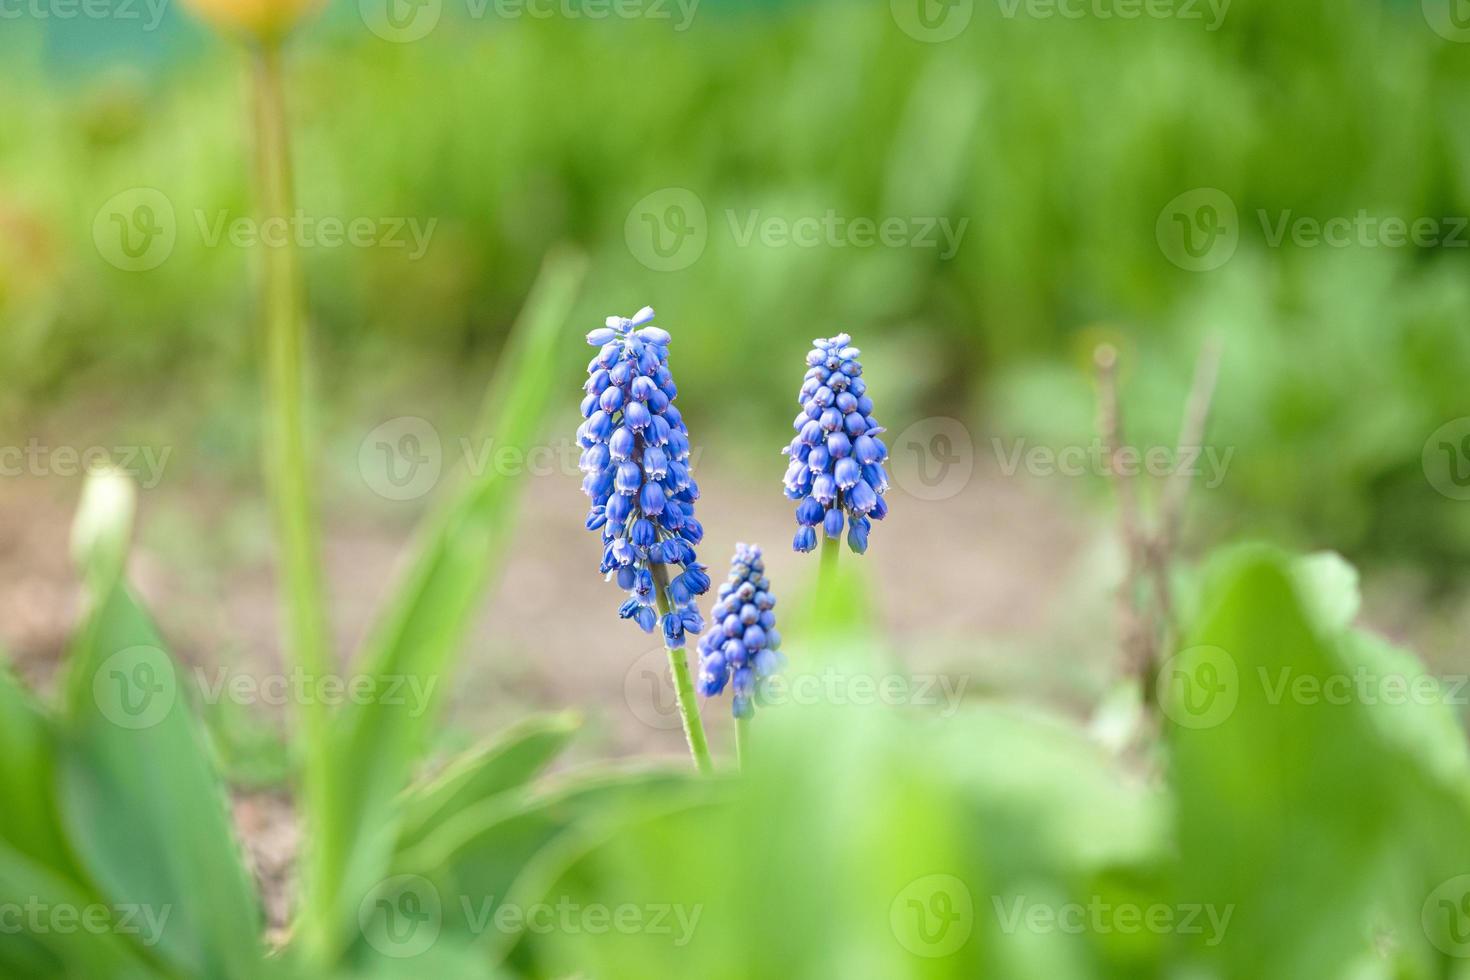 Blue muscari flower plants spring blooming season selective focus photo